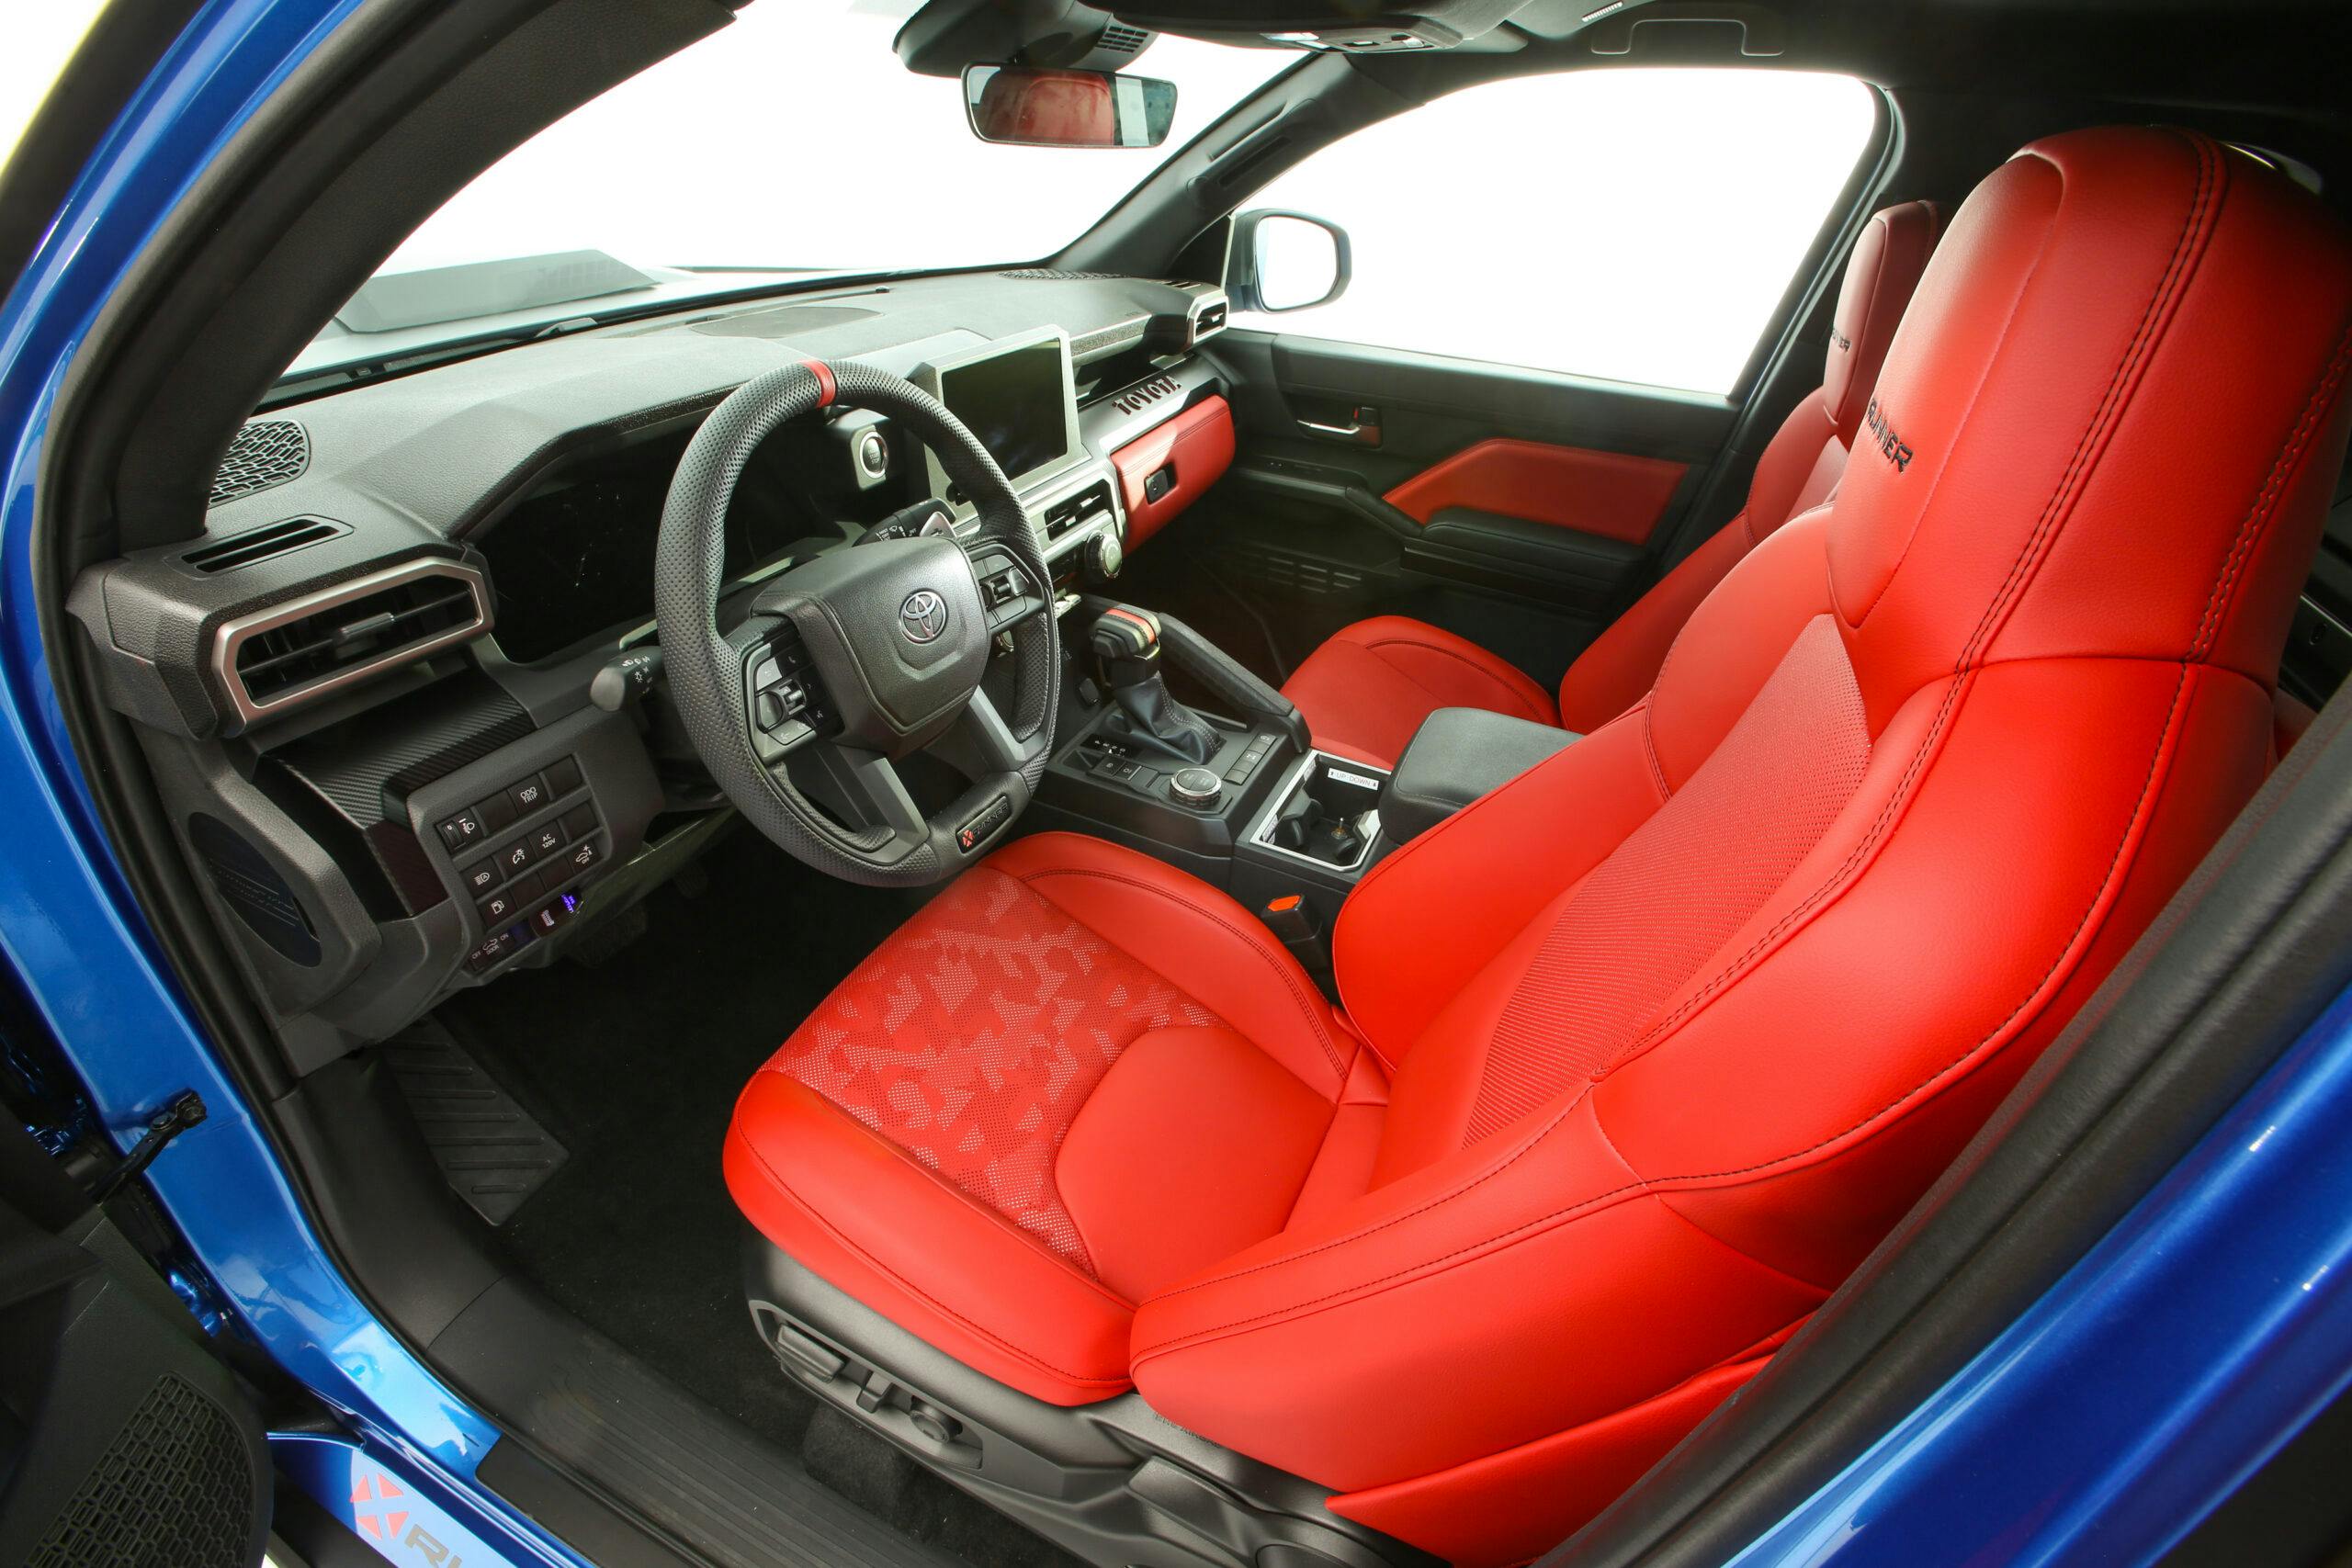 Toyota Tacoma X-Runner Concept interior driver's area